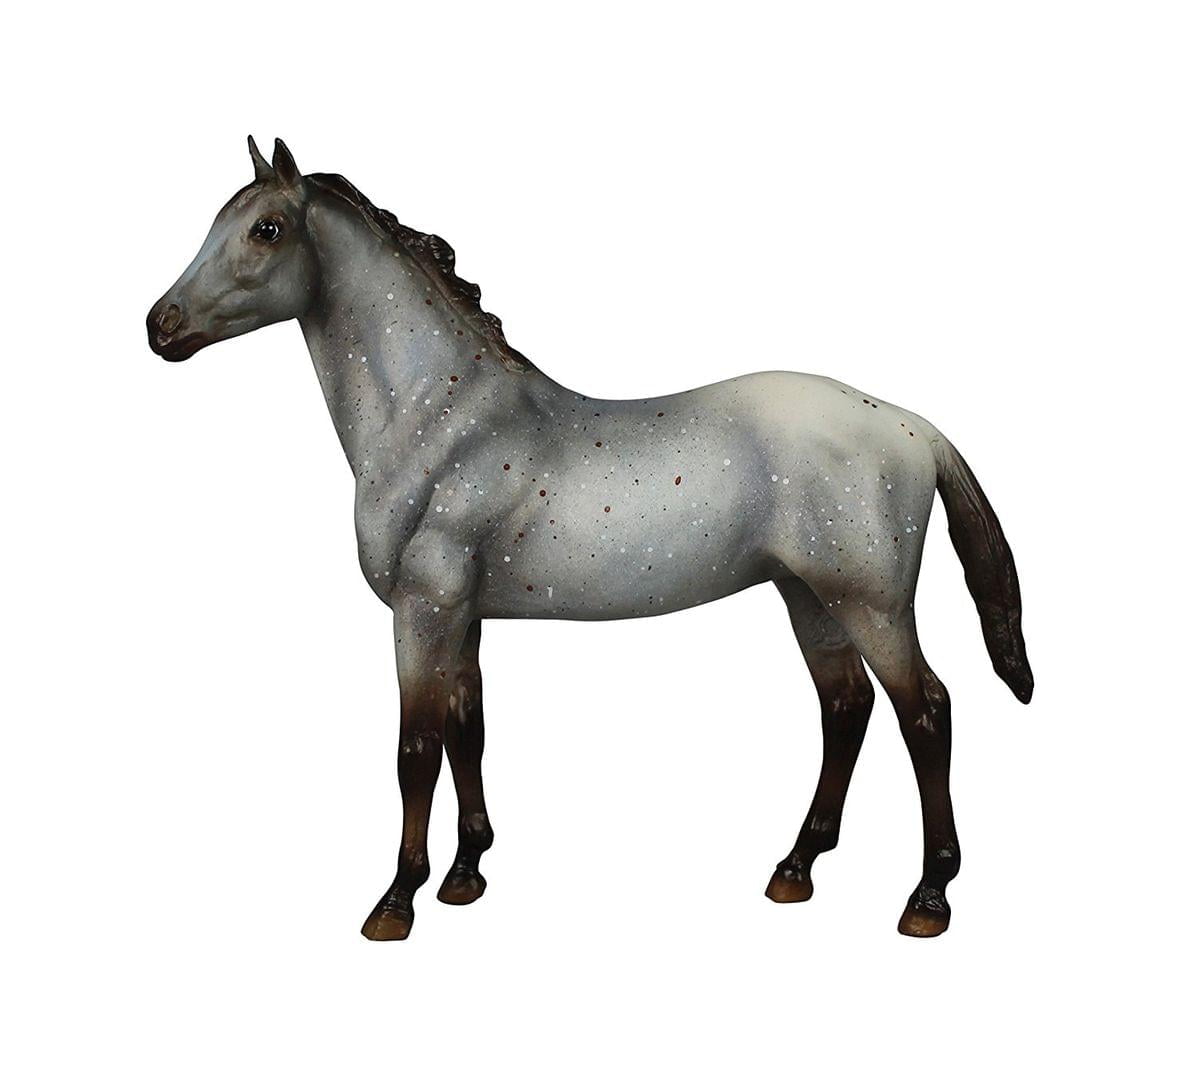 breyer horse dolls